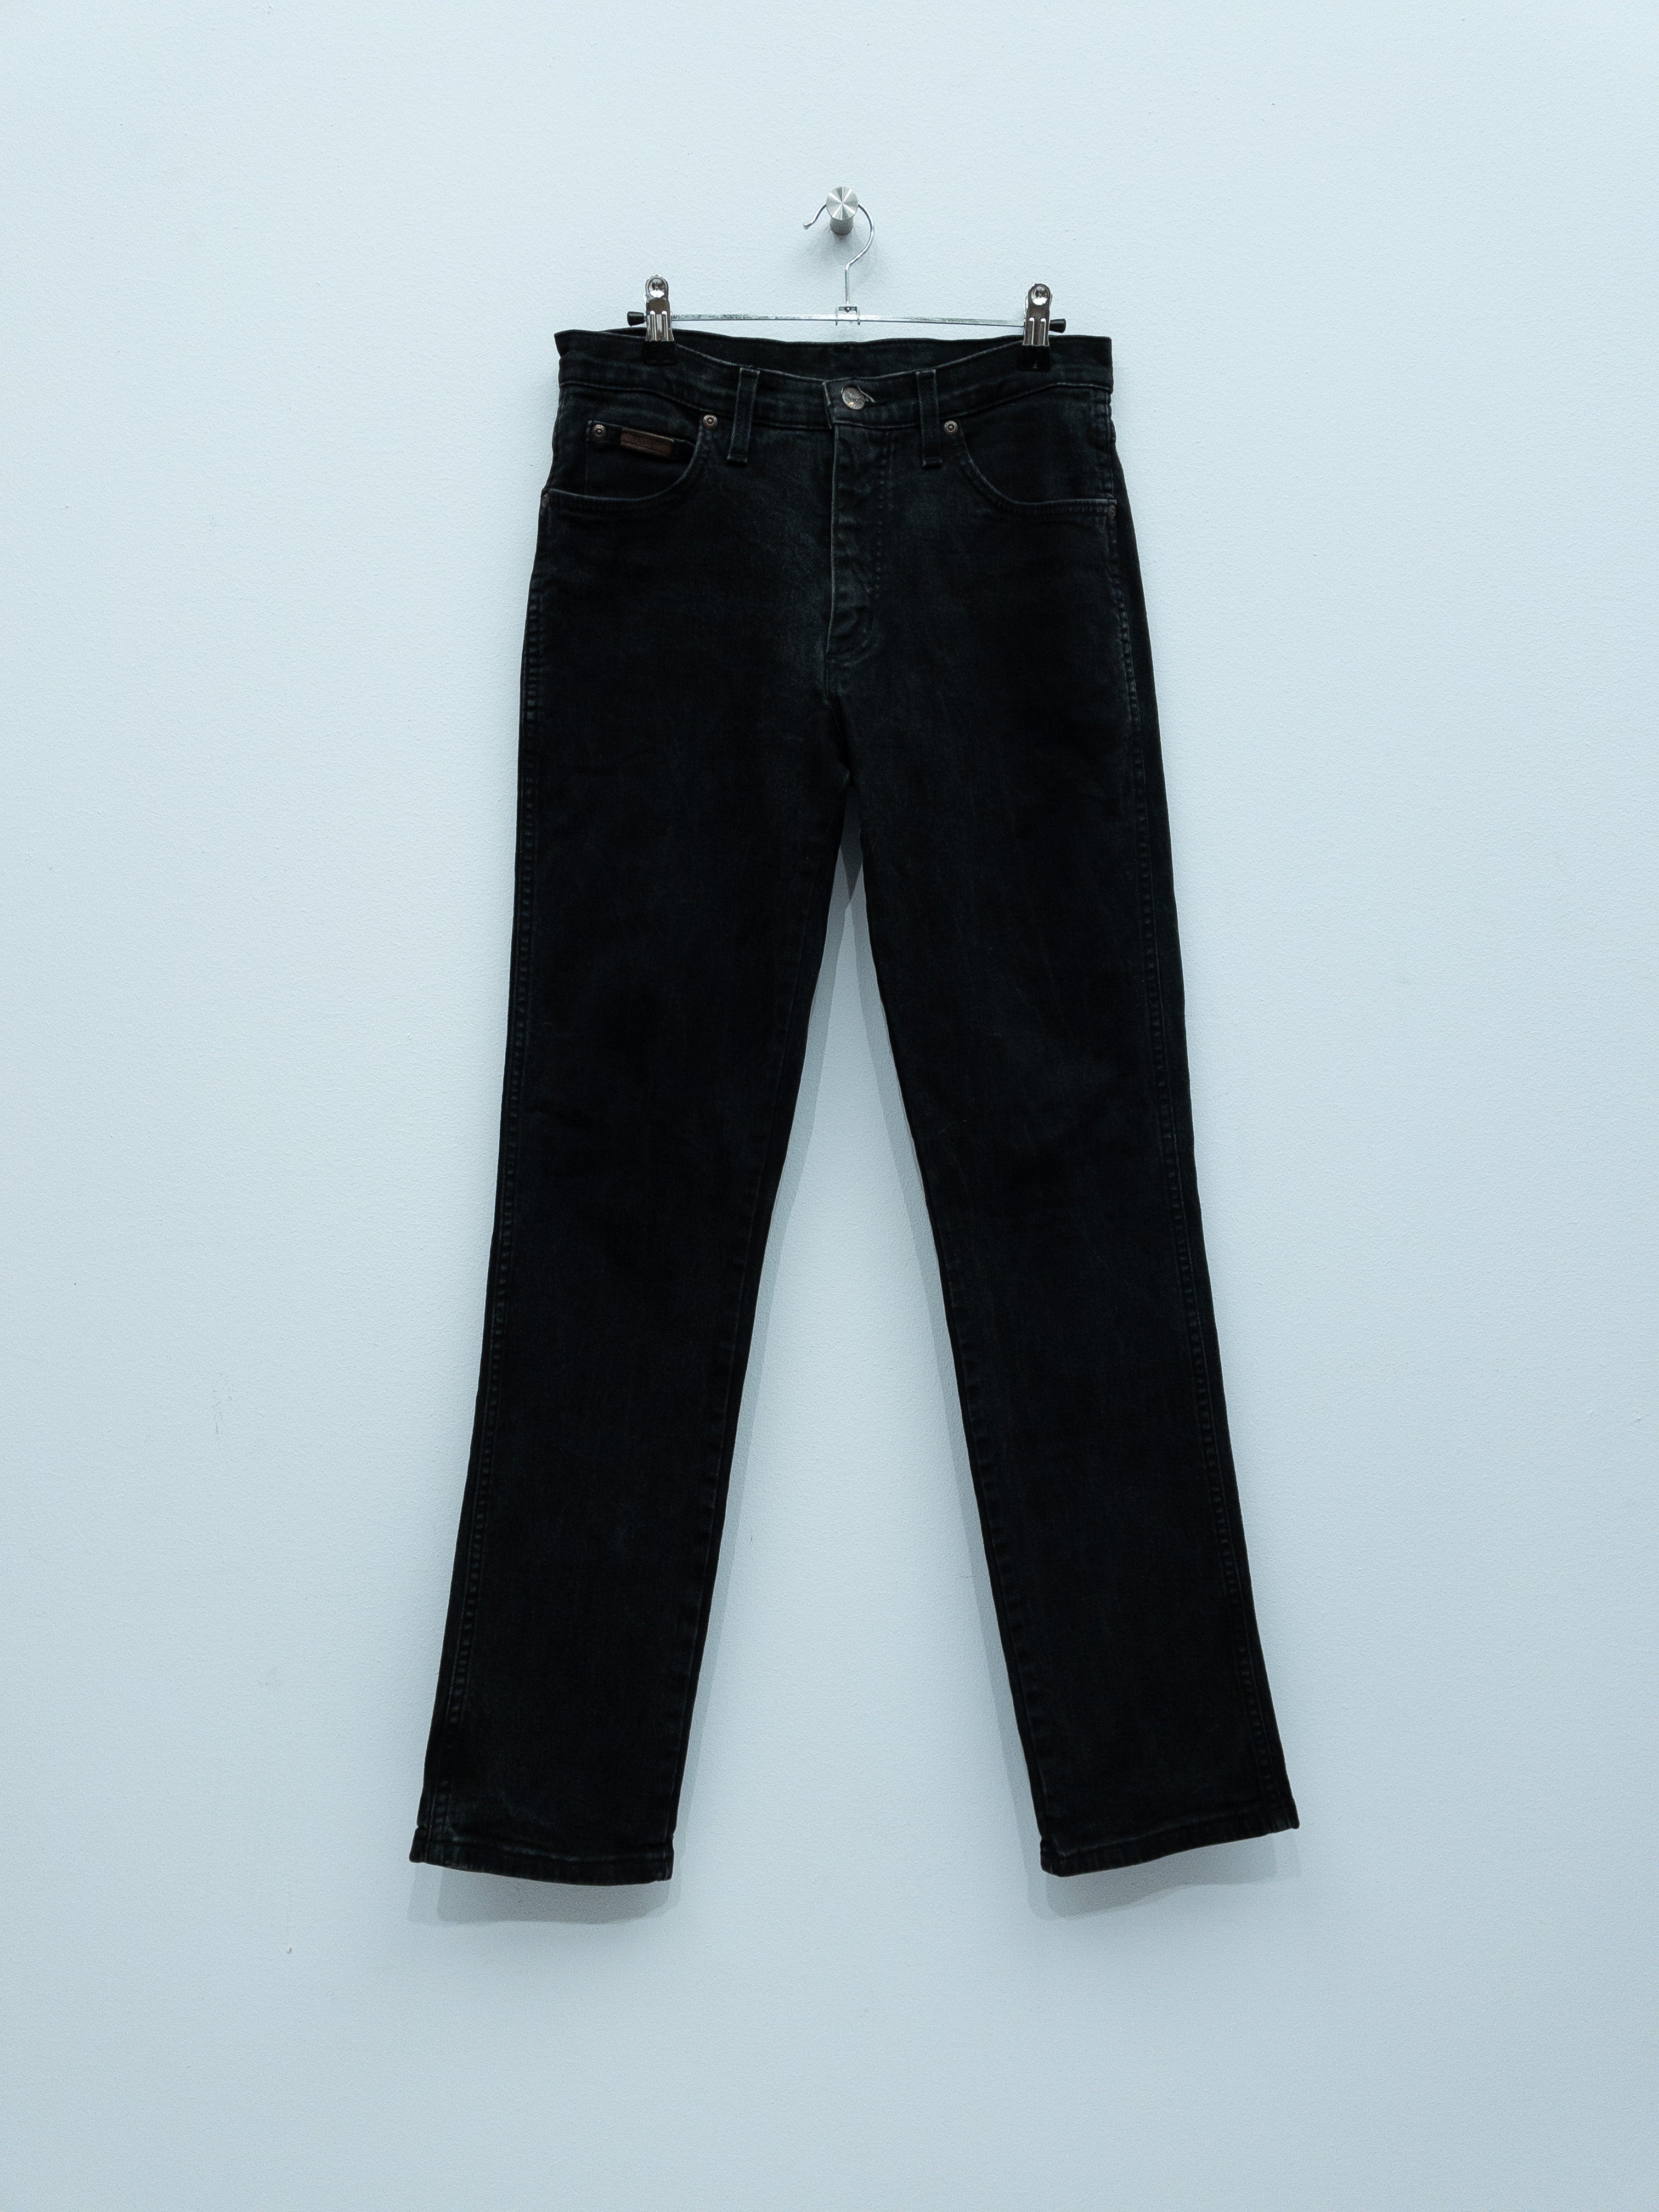 Wrangler Jeans W31